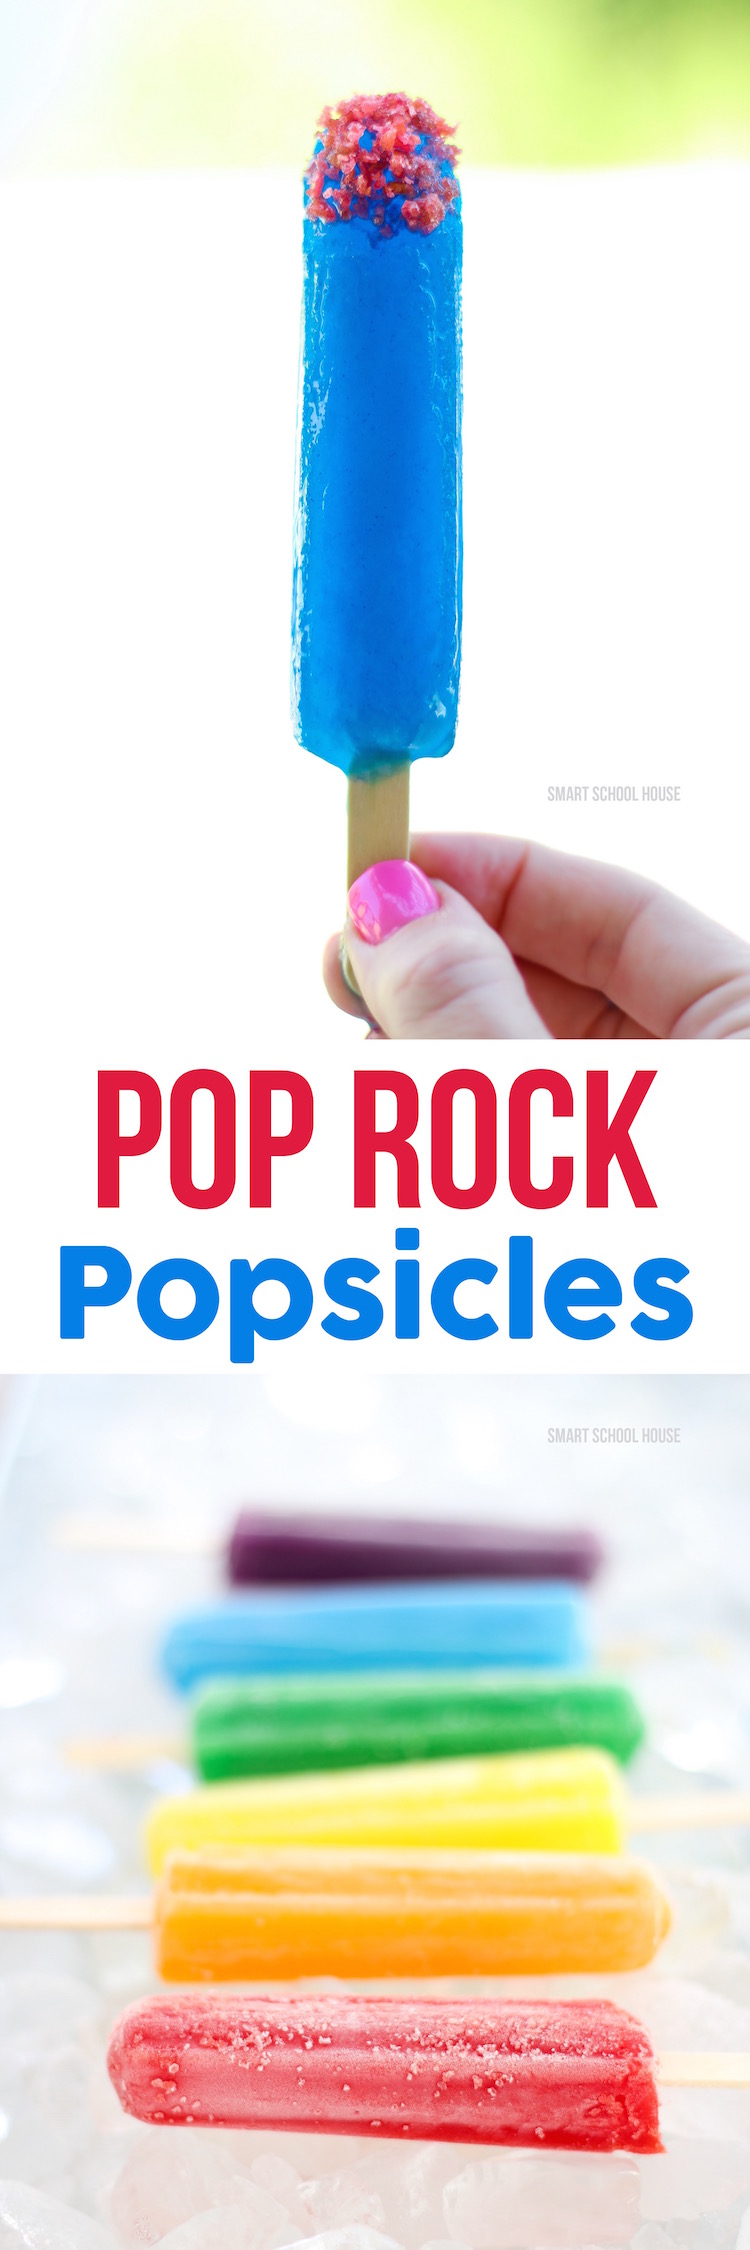 Pop Rock Popsicles - saving this idea!